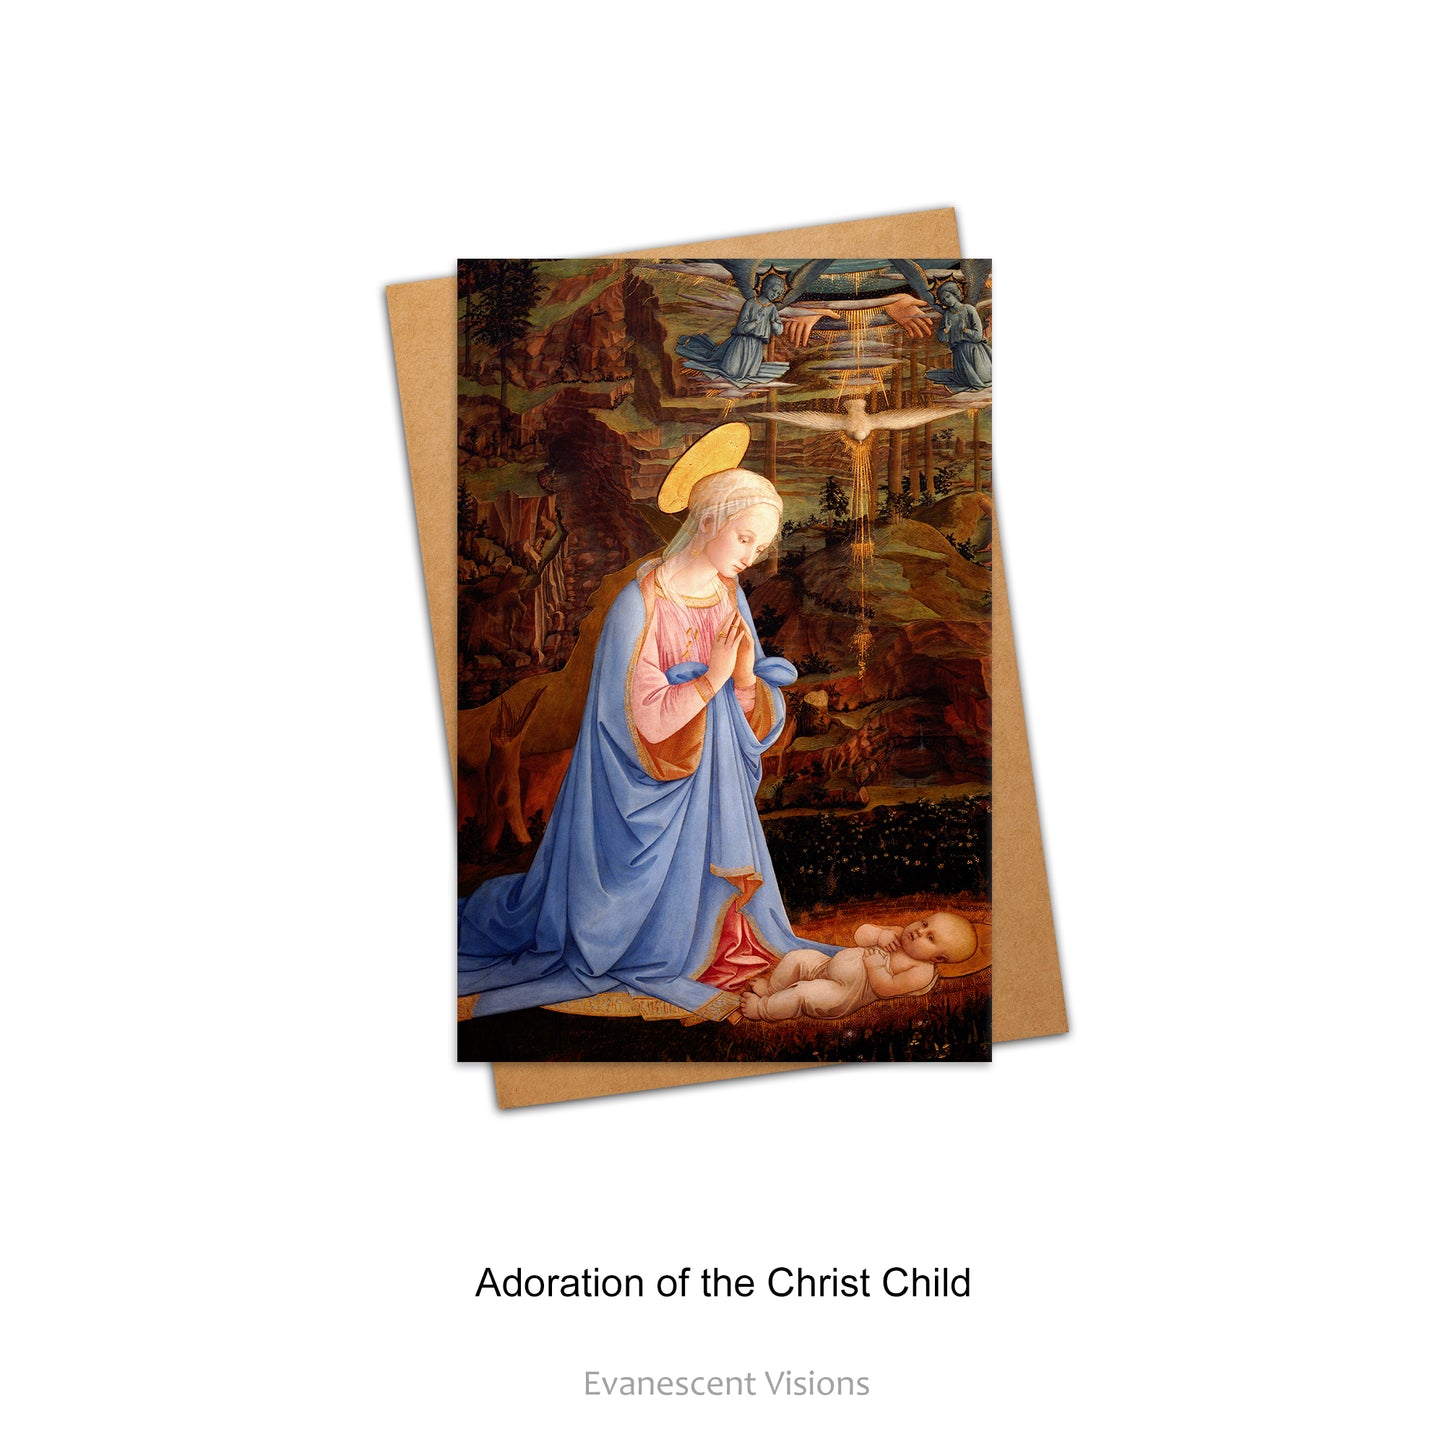 Card and envelope. Design Adoration of the Christ Child by Fra Filippo Lippi